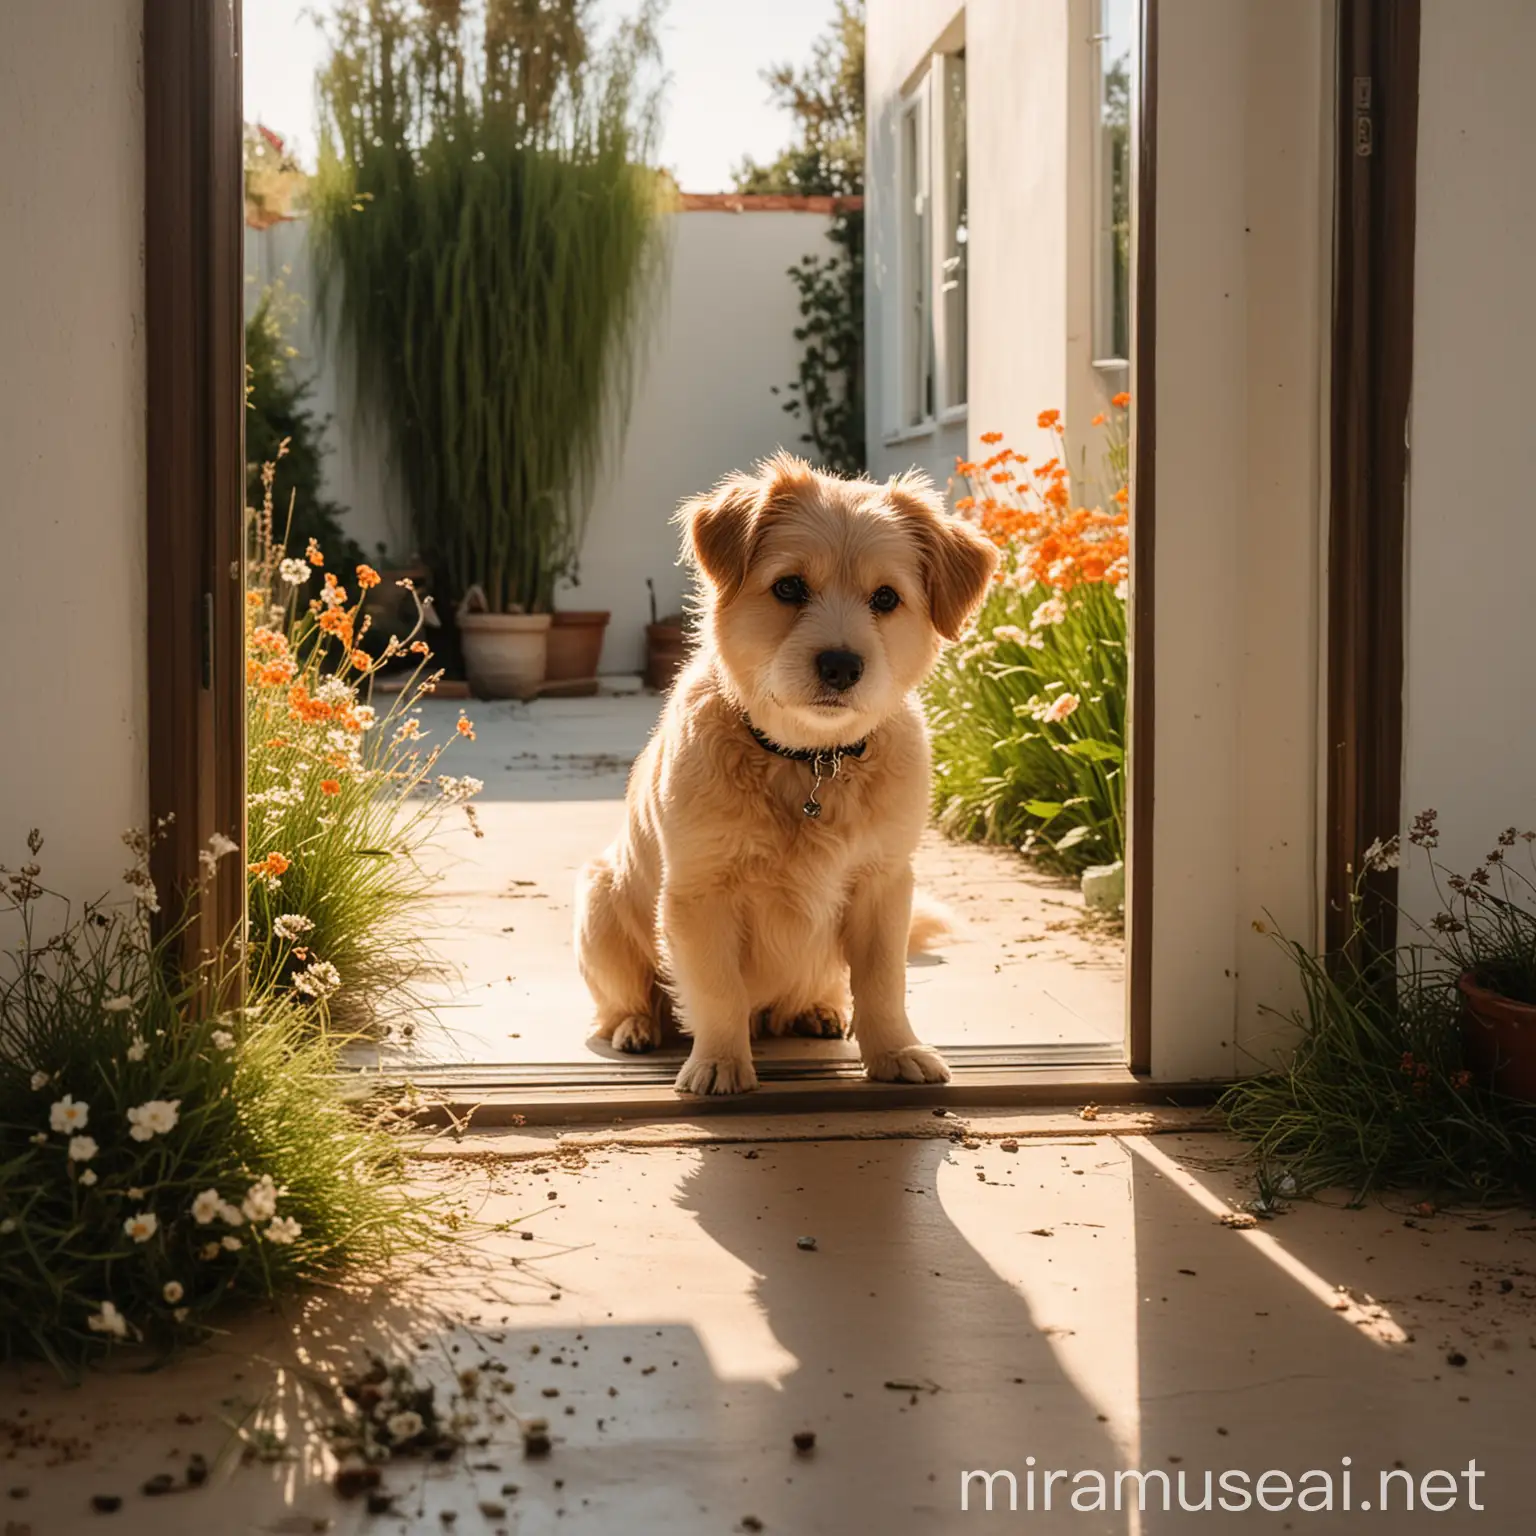 Modern Villa with Sunny Garden and Cute Dog